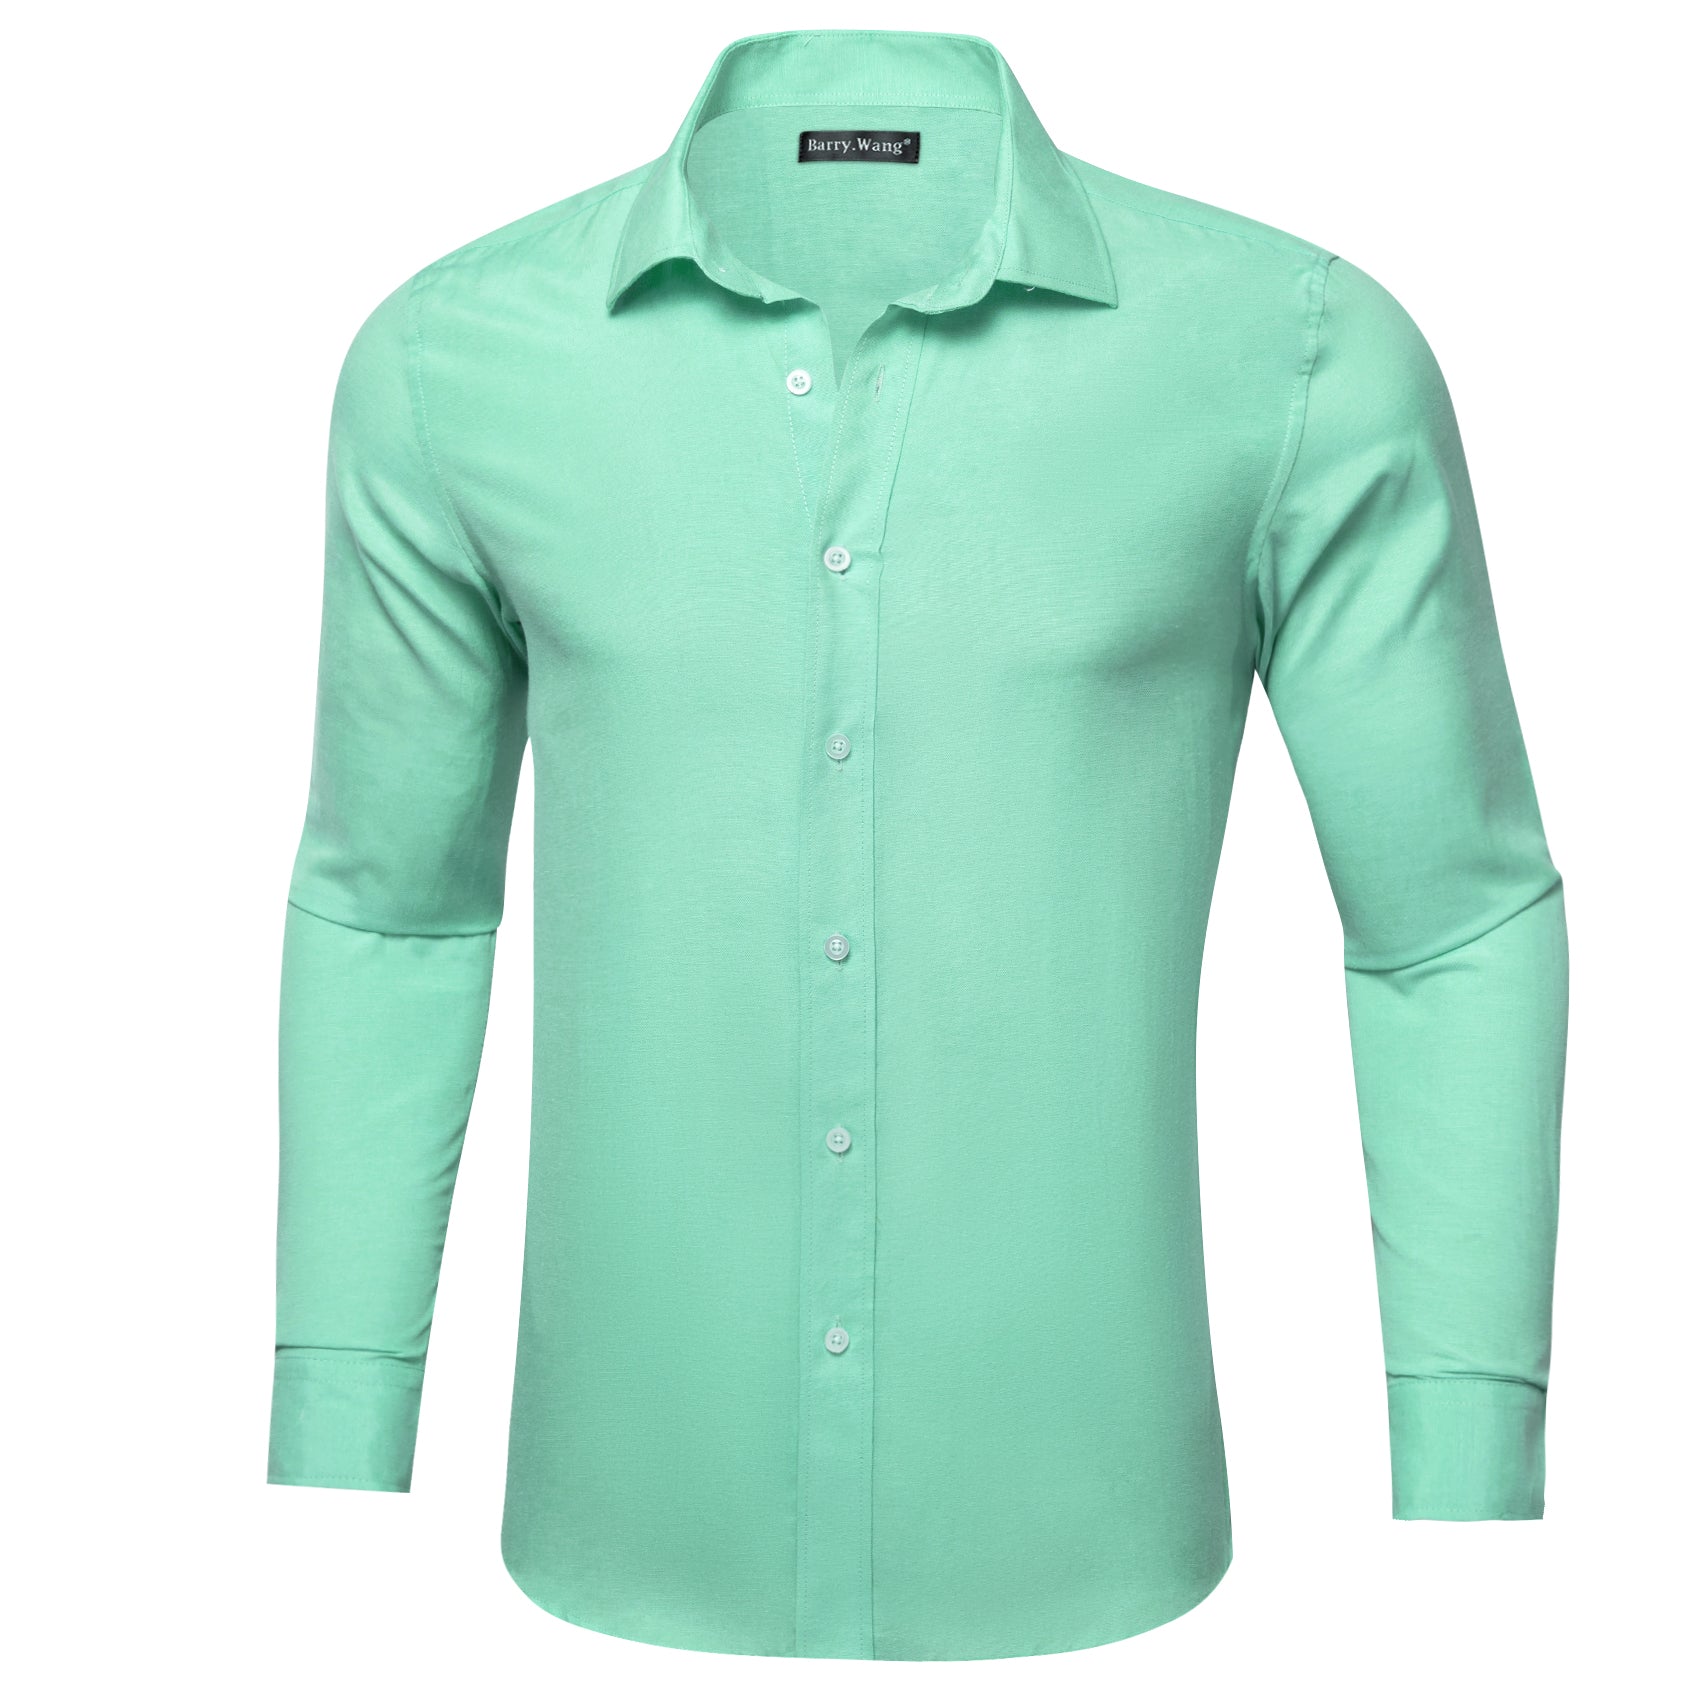 Barry.wang Turquoise Green Solid Men's Shirt